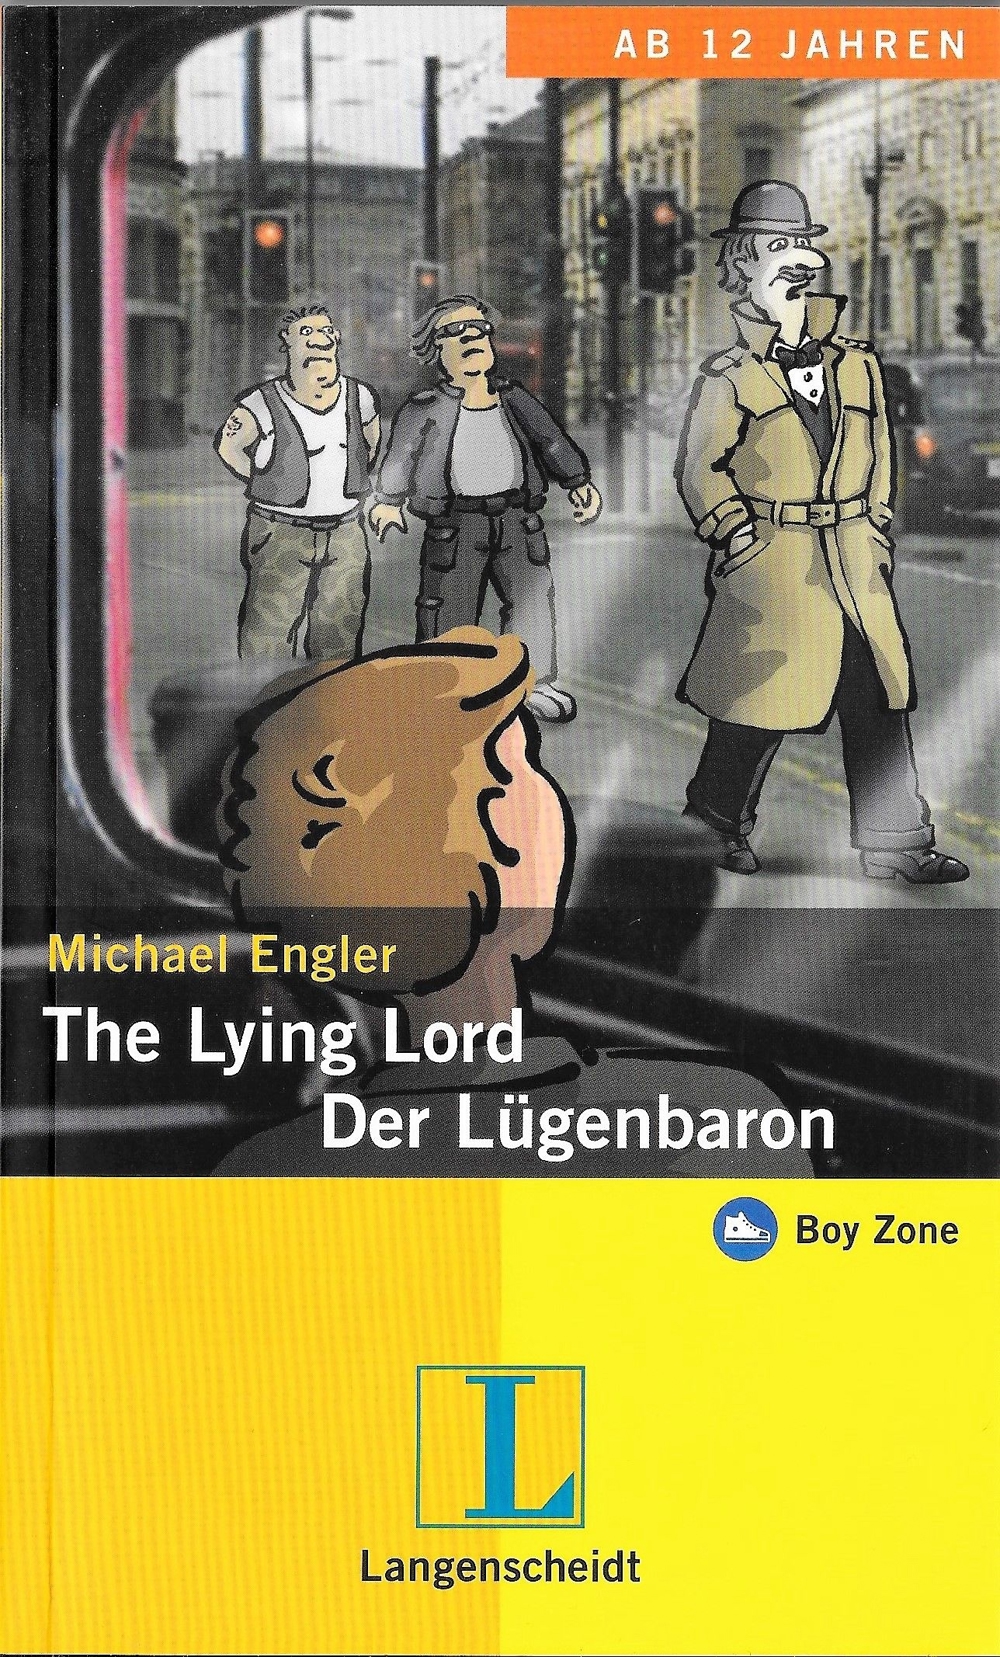 Lern-Krimi "The Lying Lord - Der Lügenbaron"